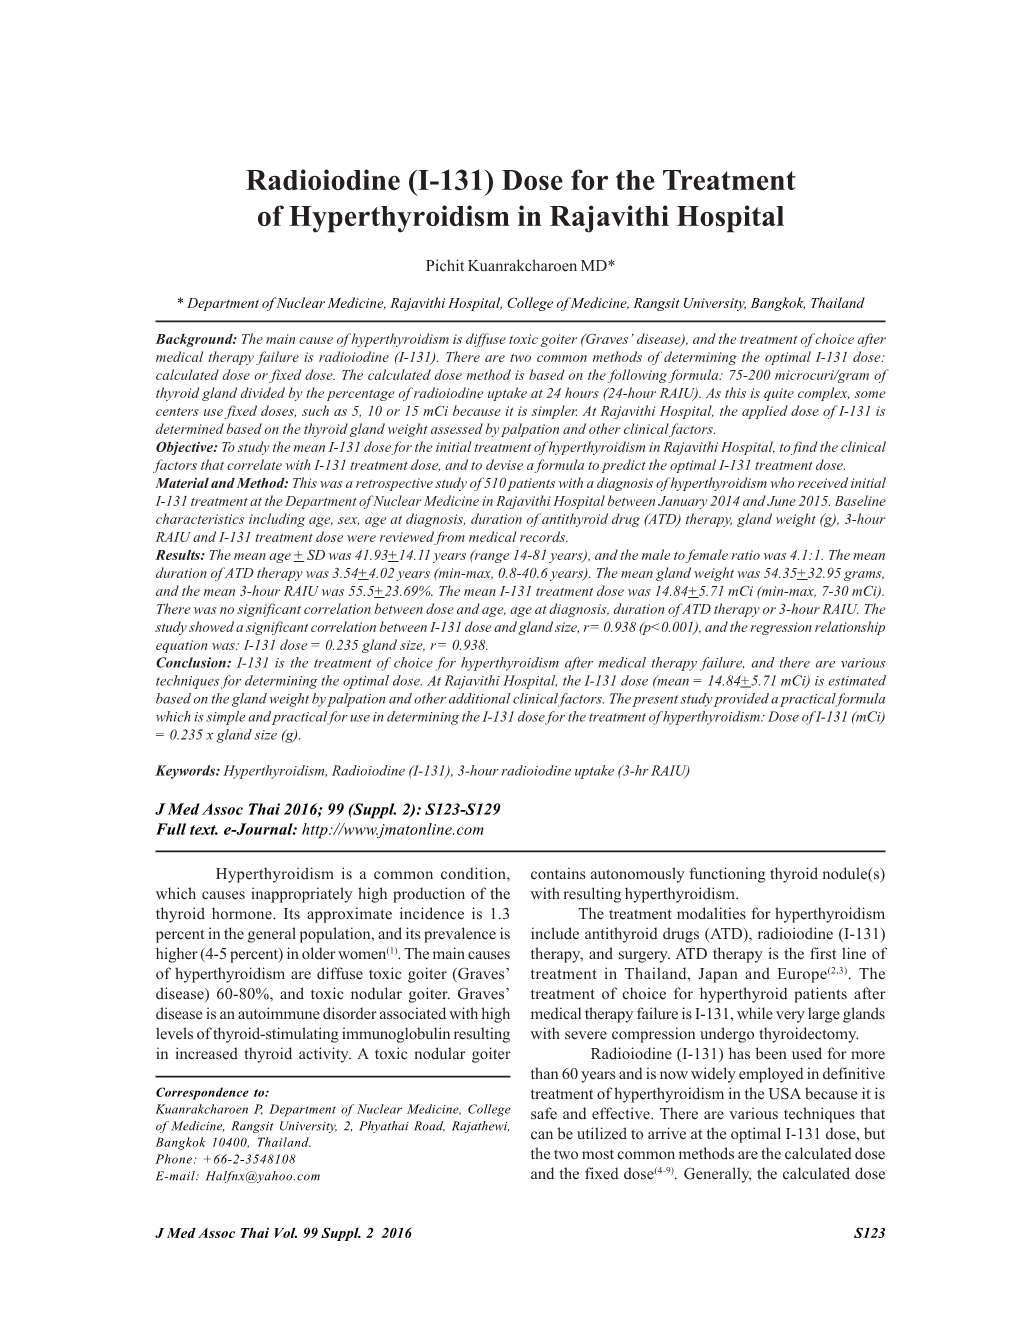 (I-131) Dose for the Treatment of Hyperthyroidism in Rajavithi Hospital